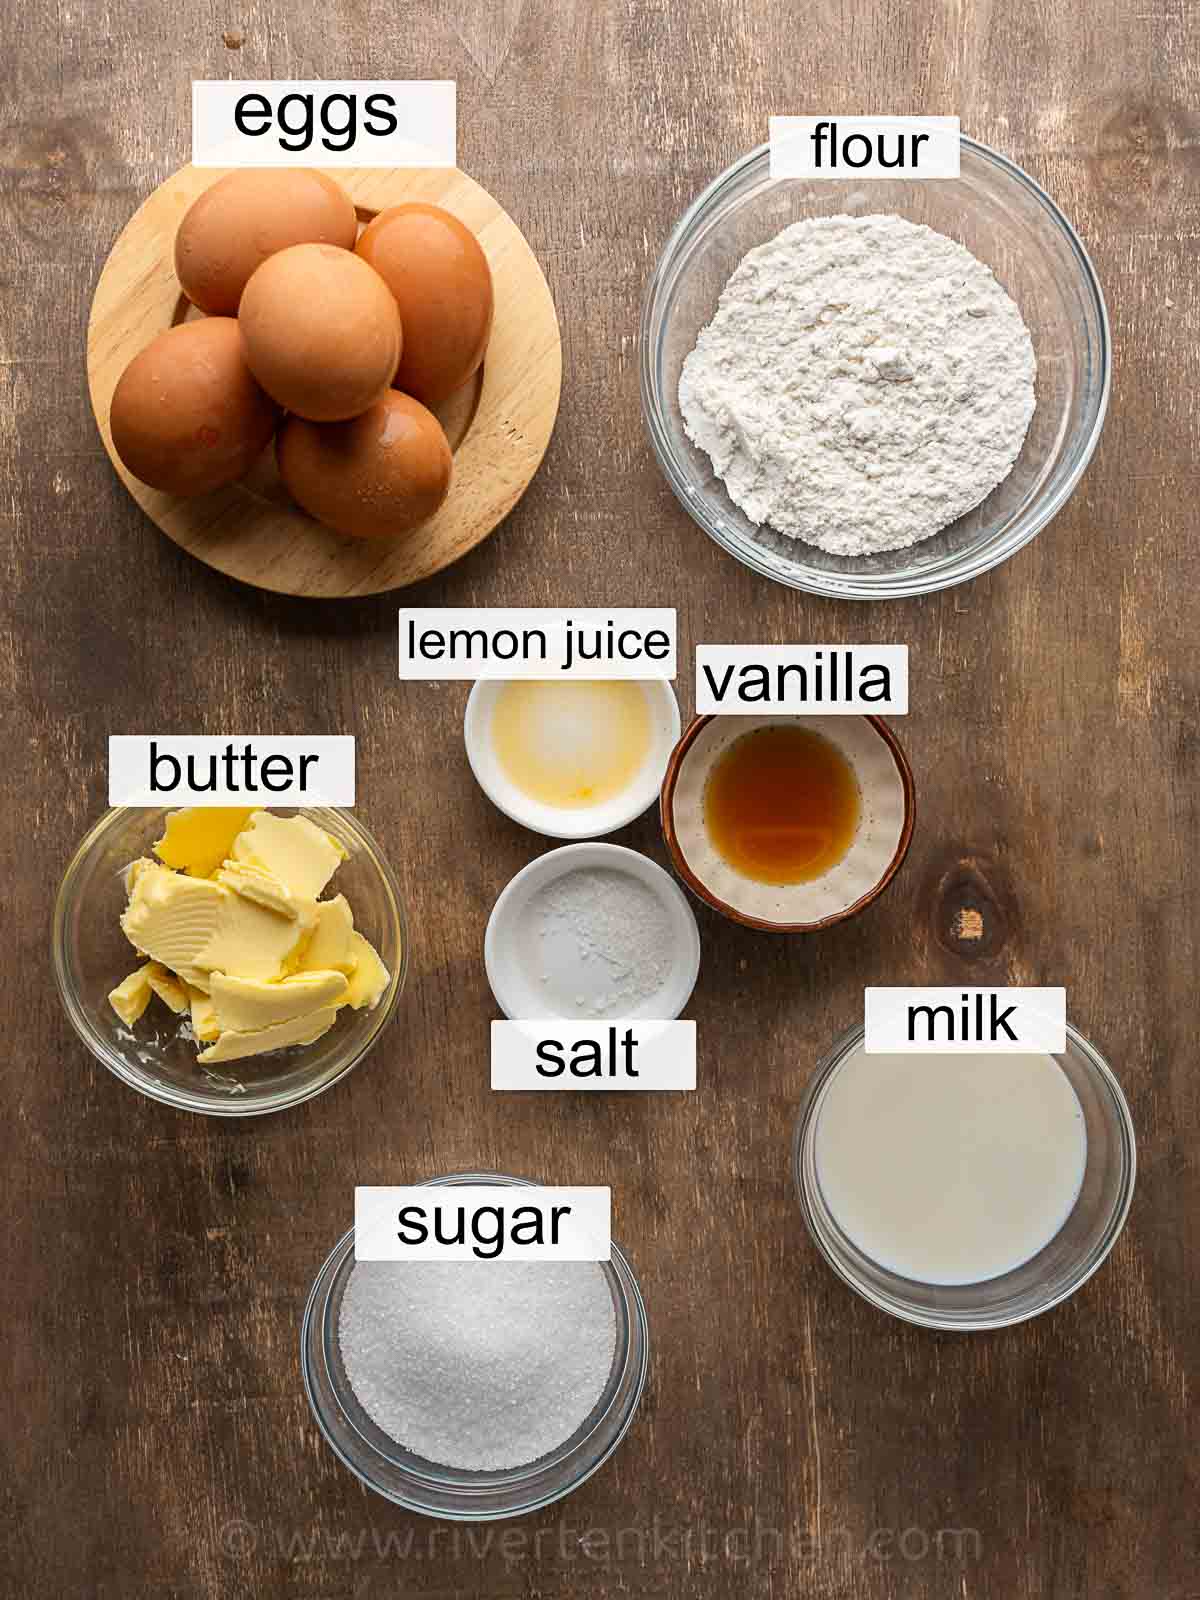 eggs, butter, flour, sugar, milk, salt, and vanilla extract.